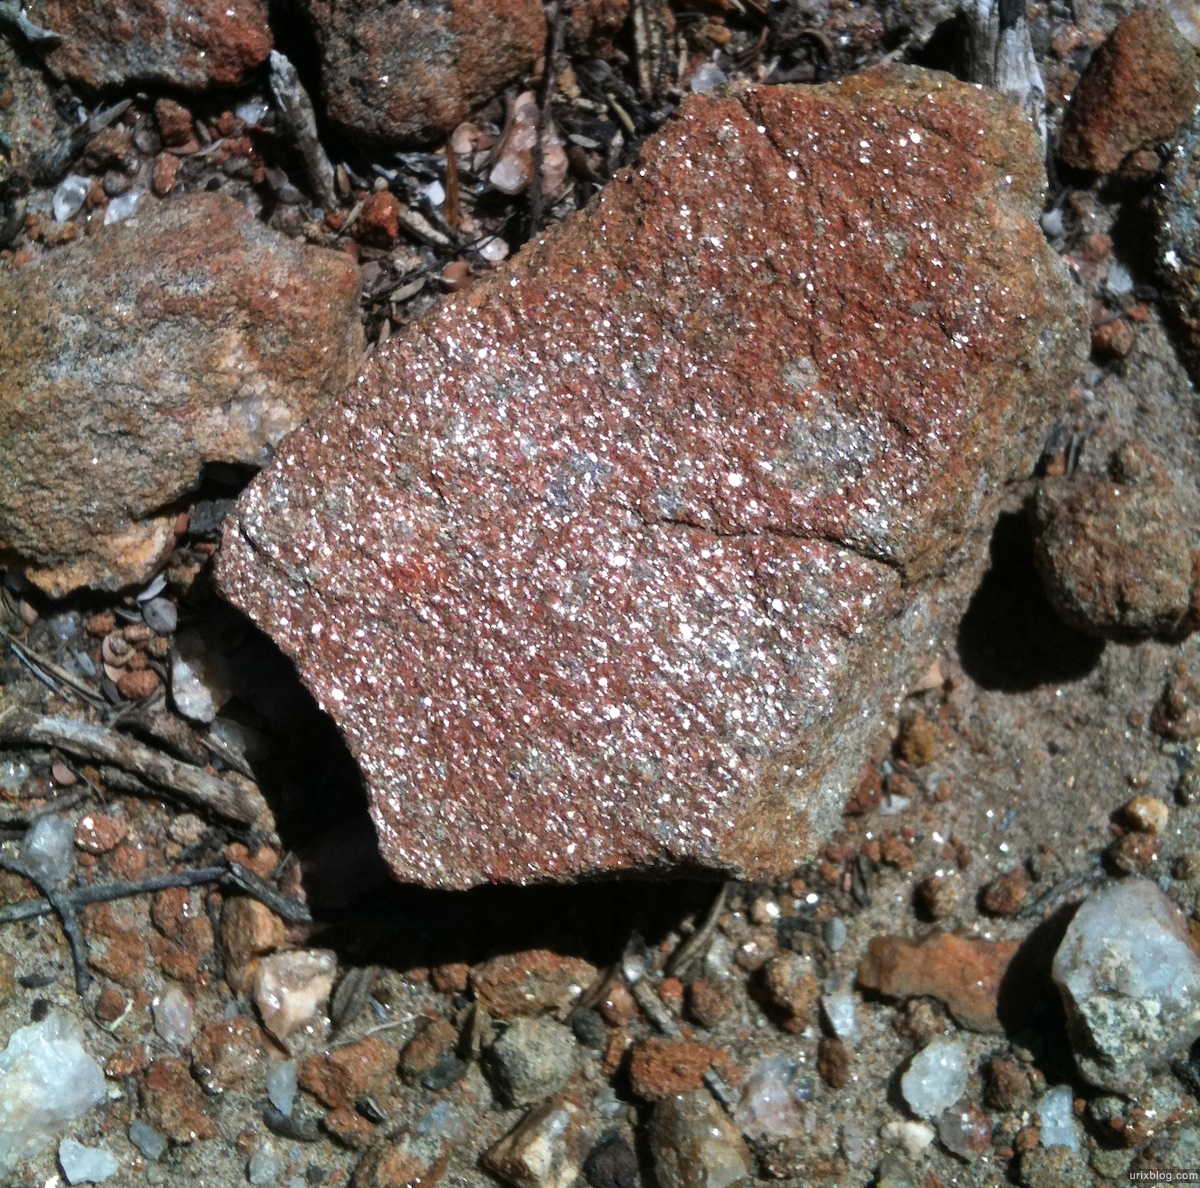 2011 South Australia, Kangaroo Island, Остров Кенгуру, Южная Австралия, Flinders Chase, rocks, камни